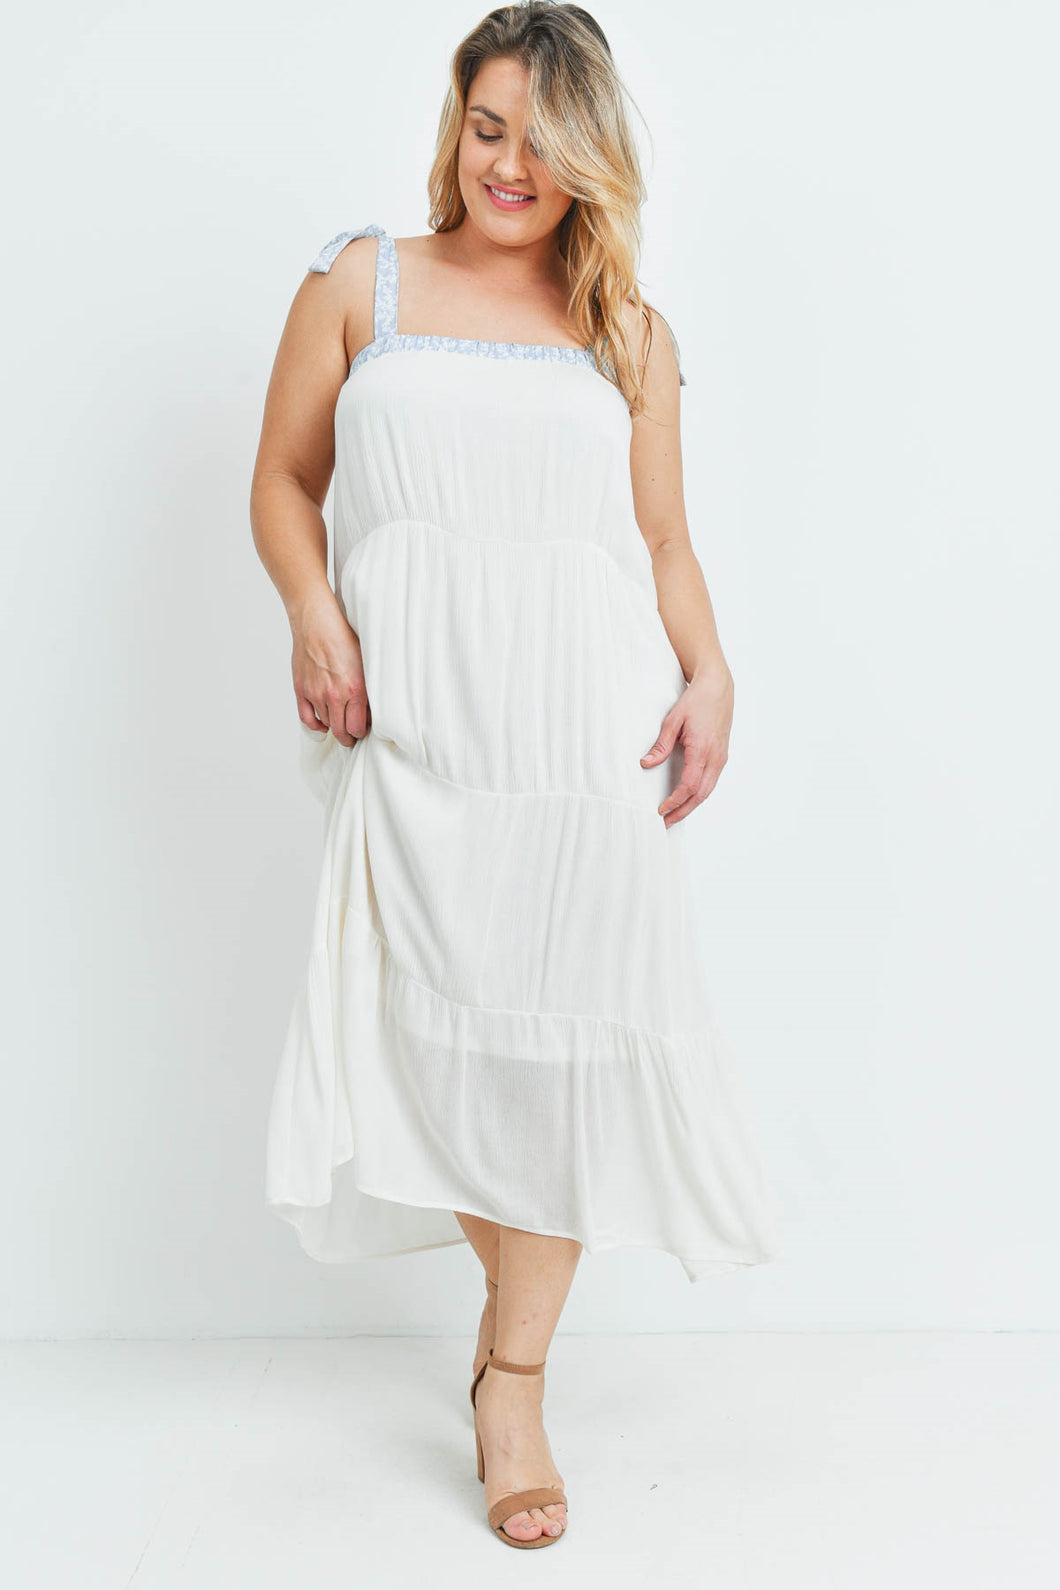 White Linen Plus Size Dress